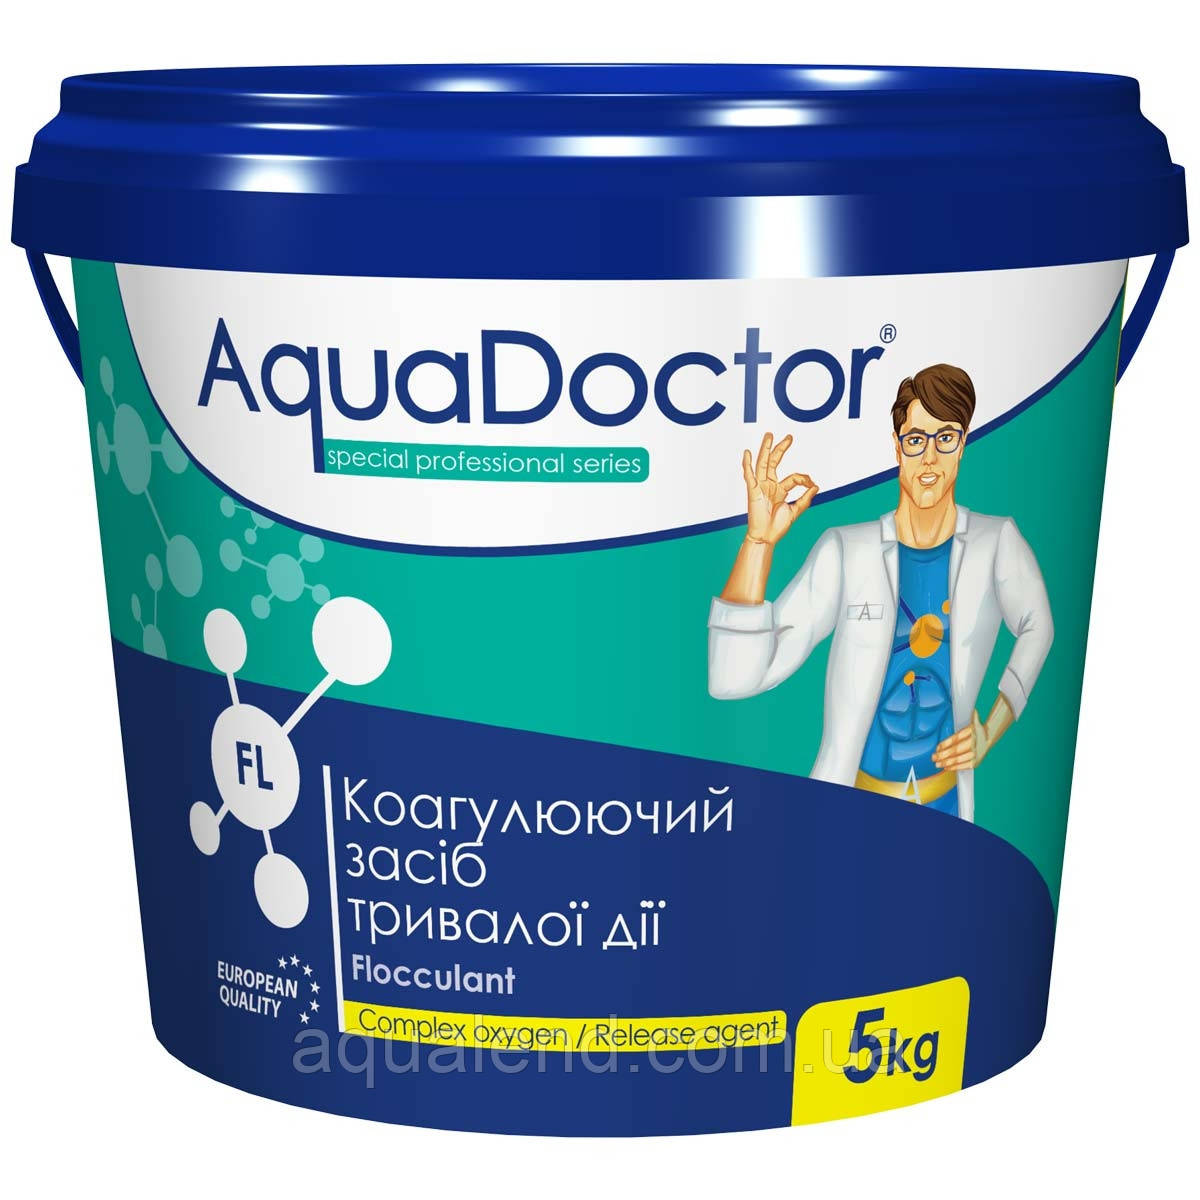 AquaDoctor Коагулюючу засіб у гранулах AquaDoctor FL-5 кг.